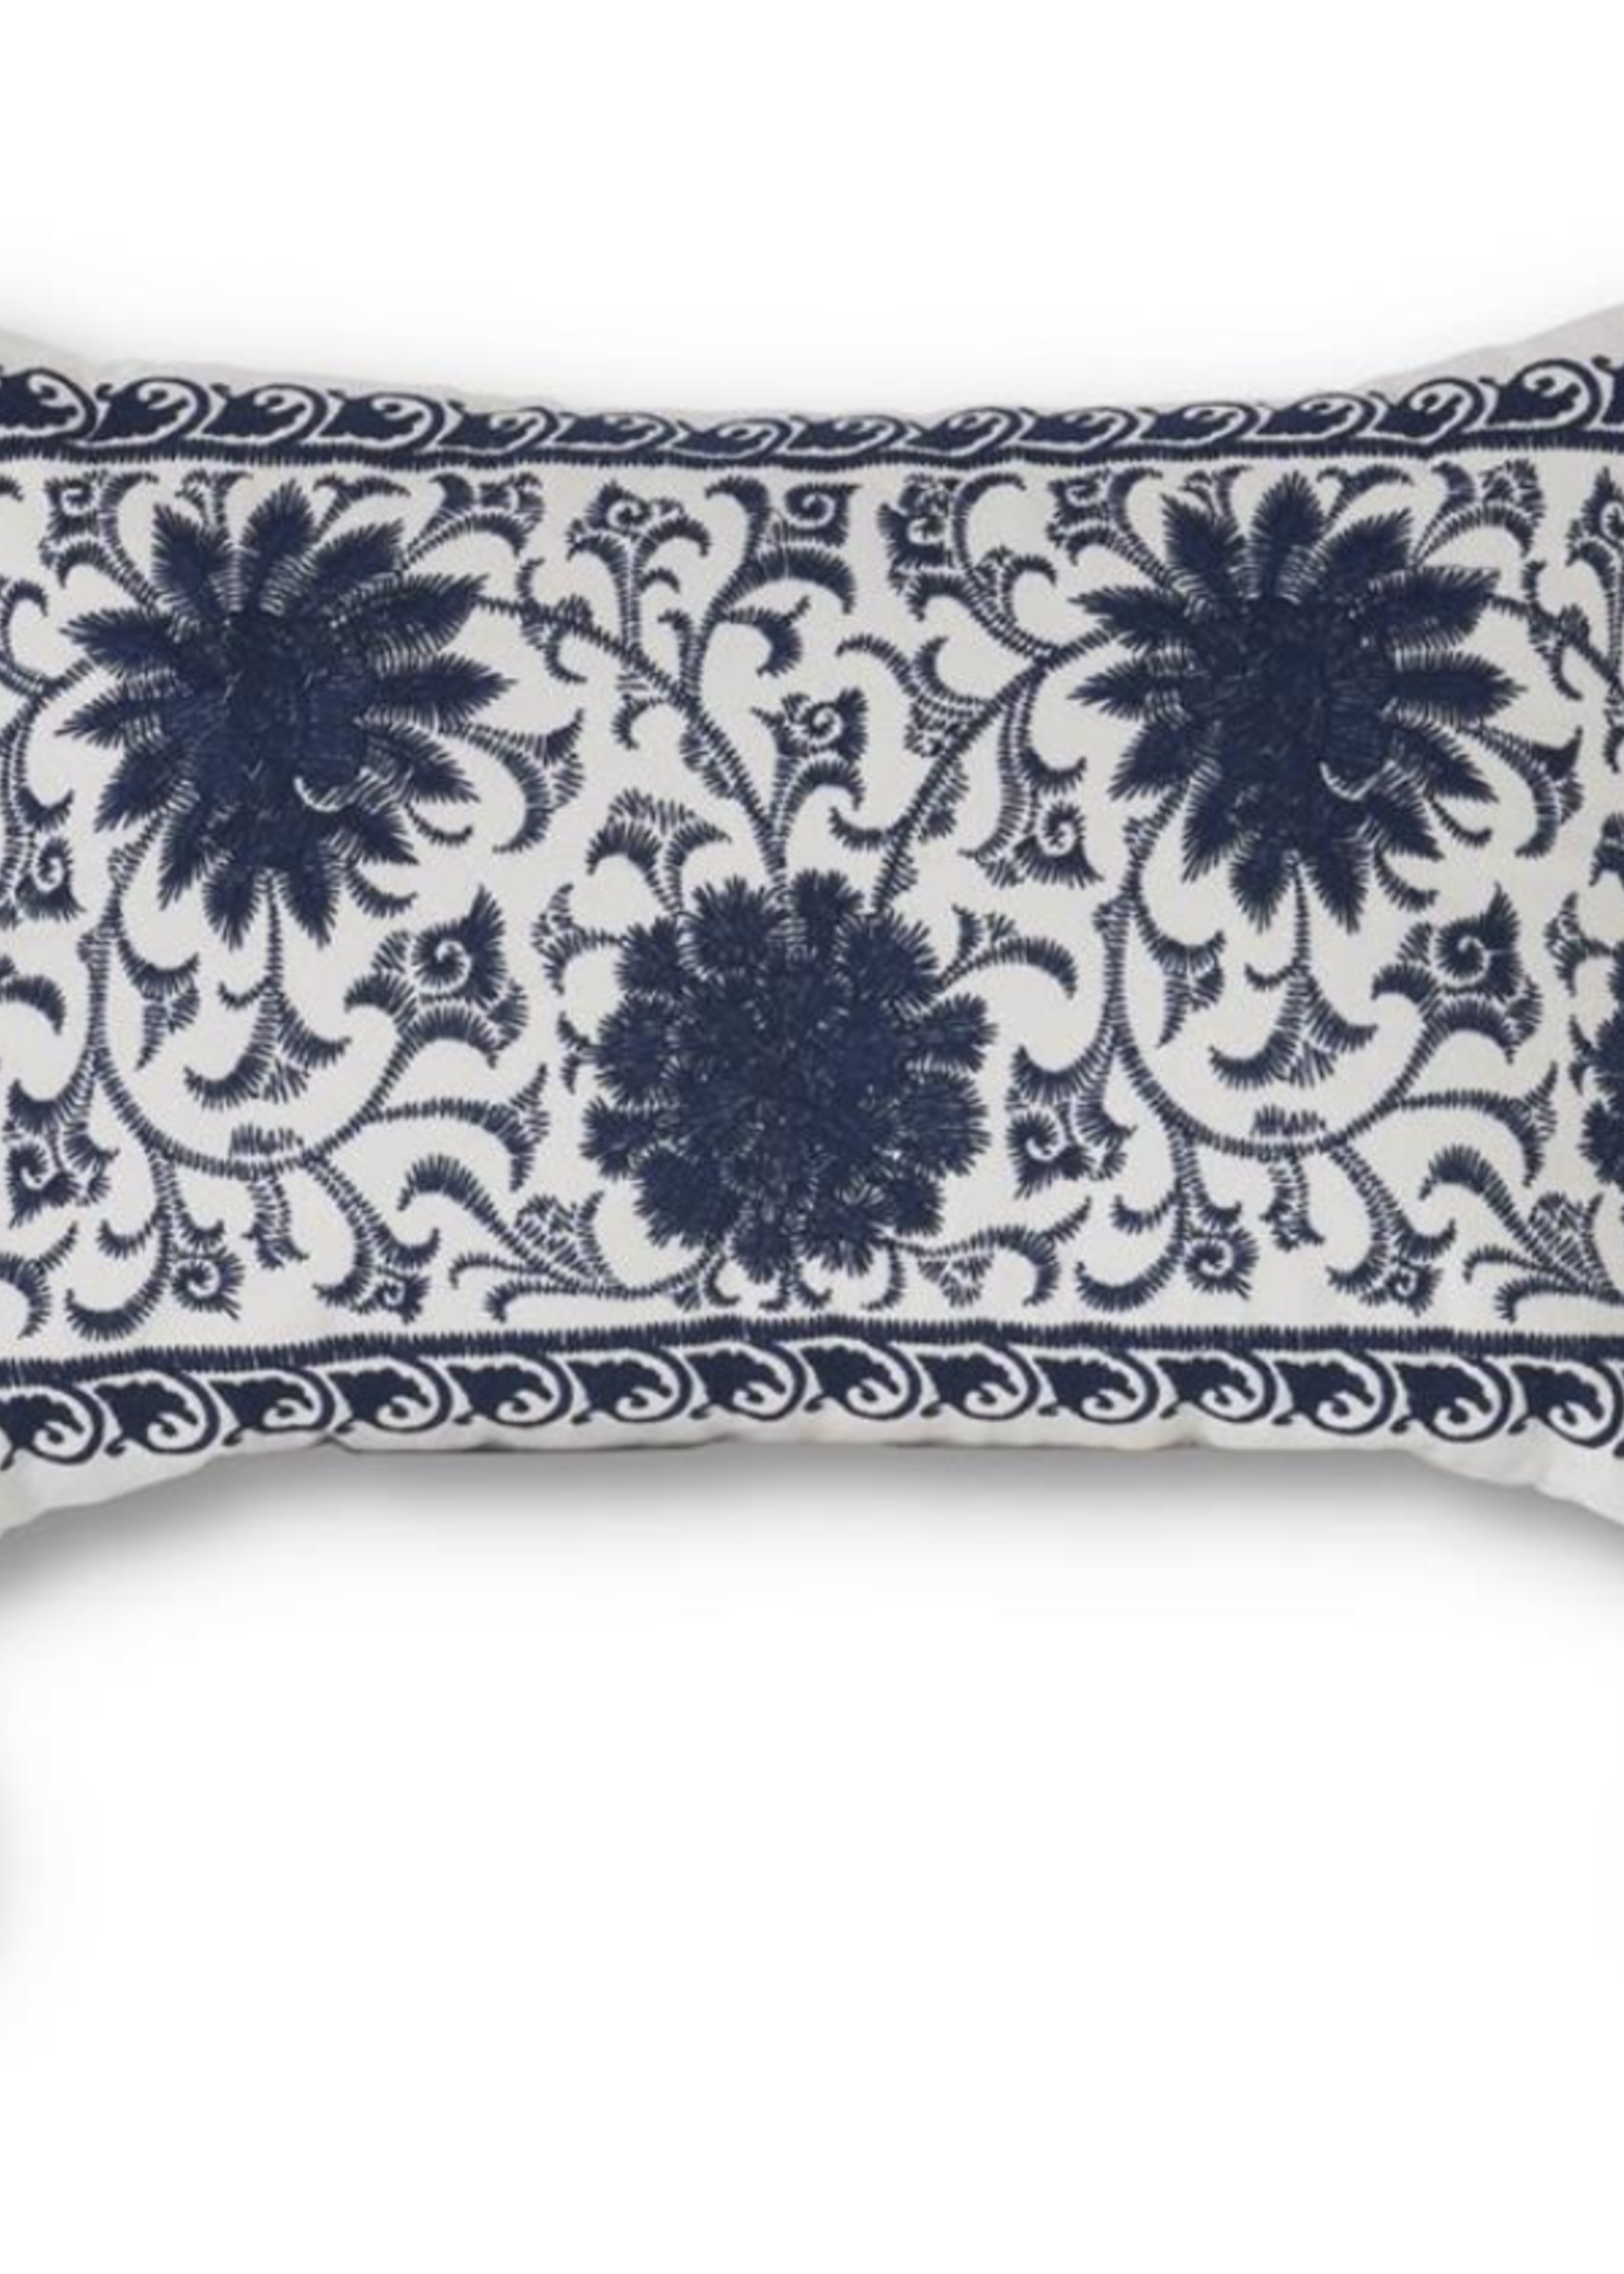 K & K Interiors 11 x 17 White & Blue Rectangular Embroidered Mandala Pillow